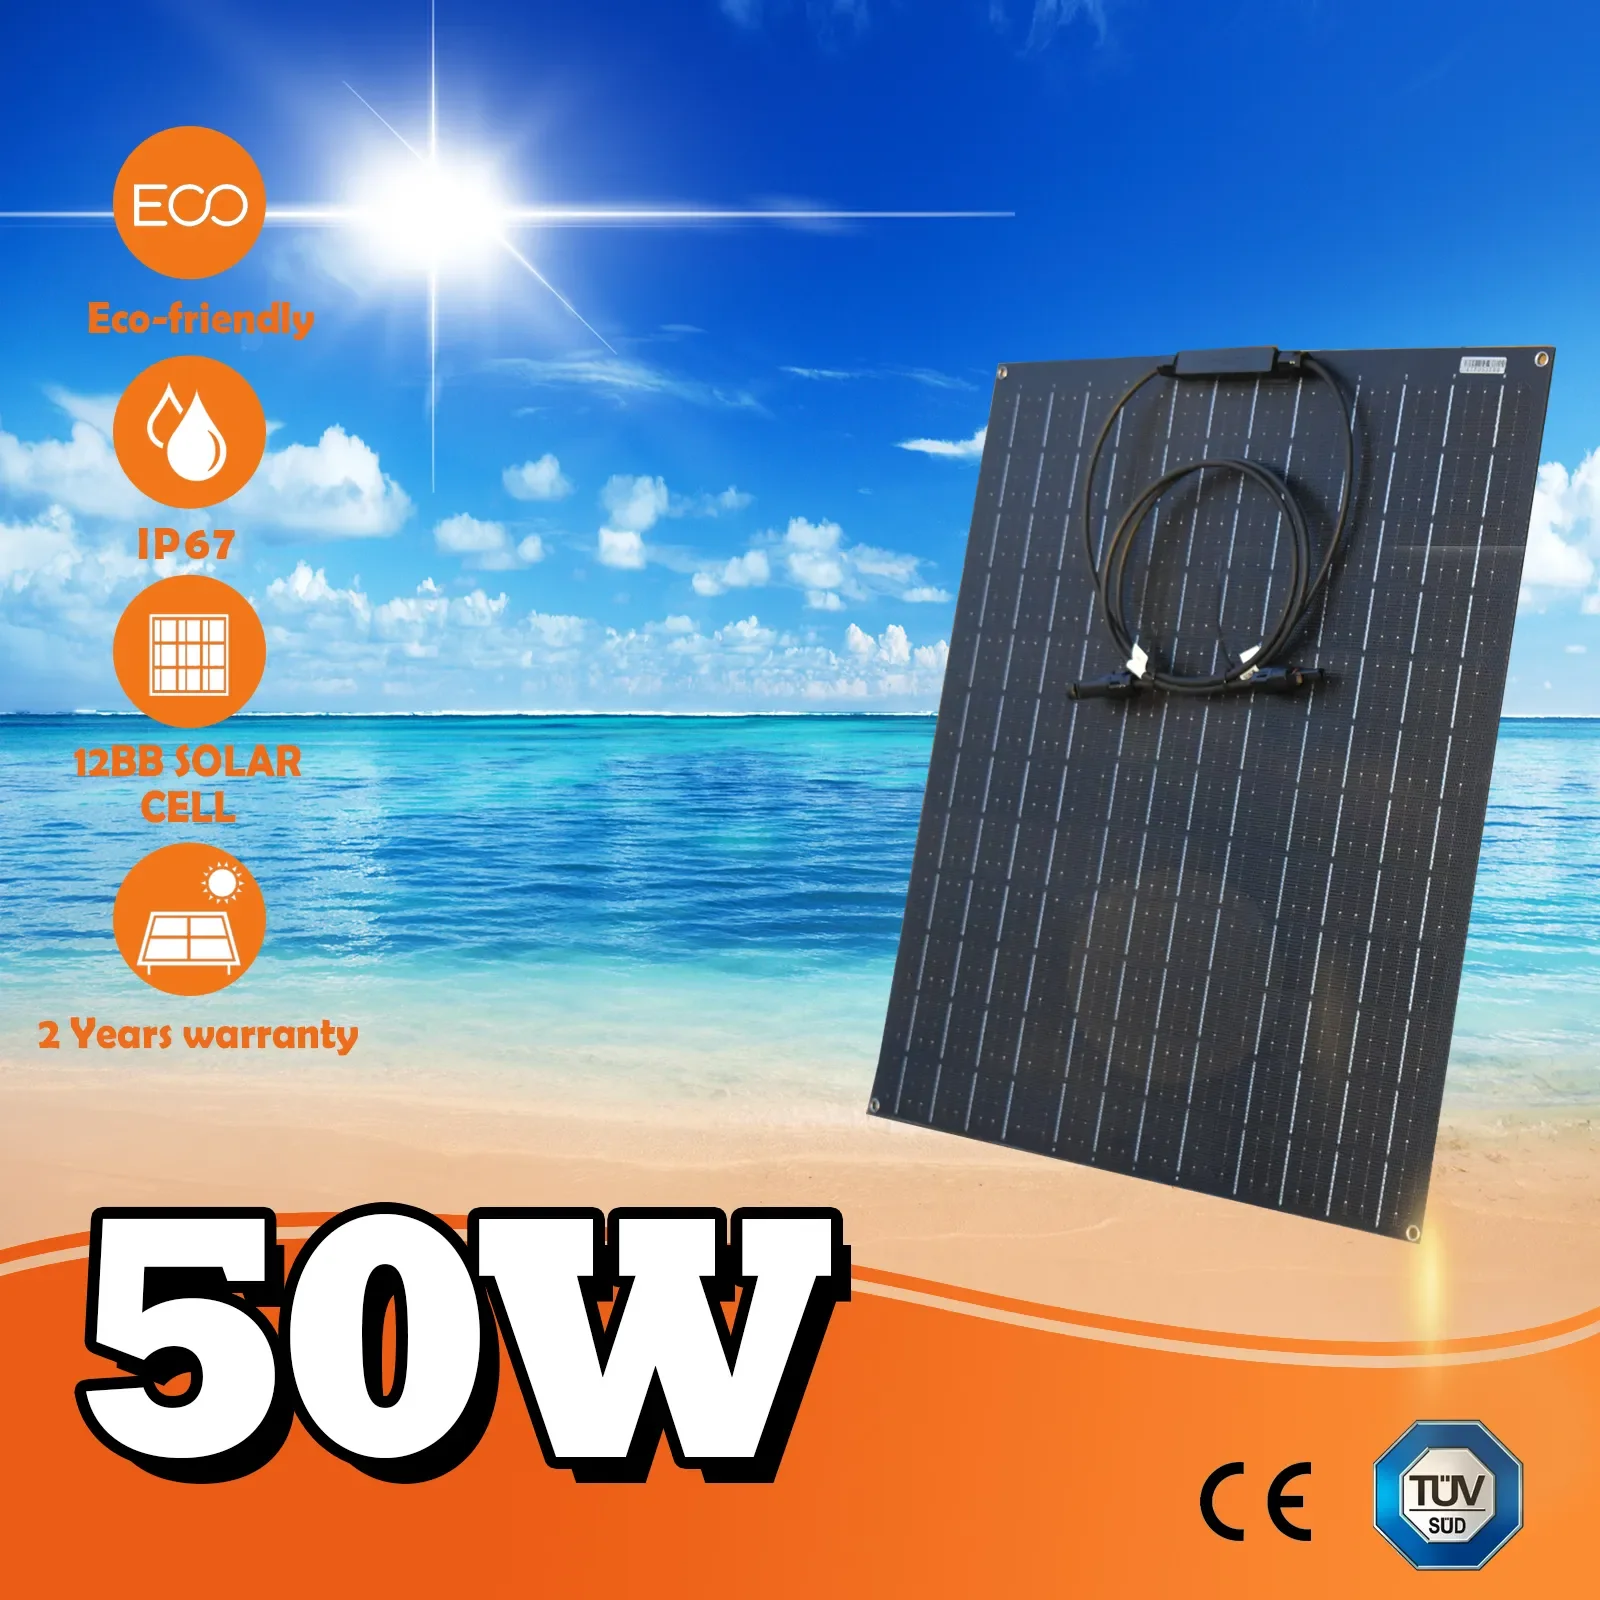 

50W 100W solar panel 12V ETFE Flexible Monocrystalline Solar Cell Battery System Kit for Marine Camping Boat RV,